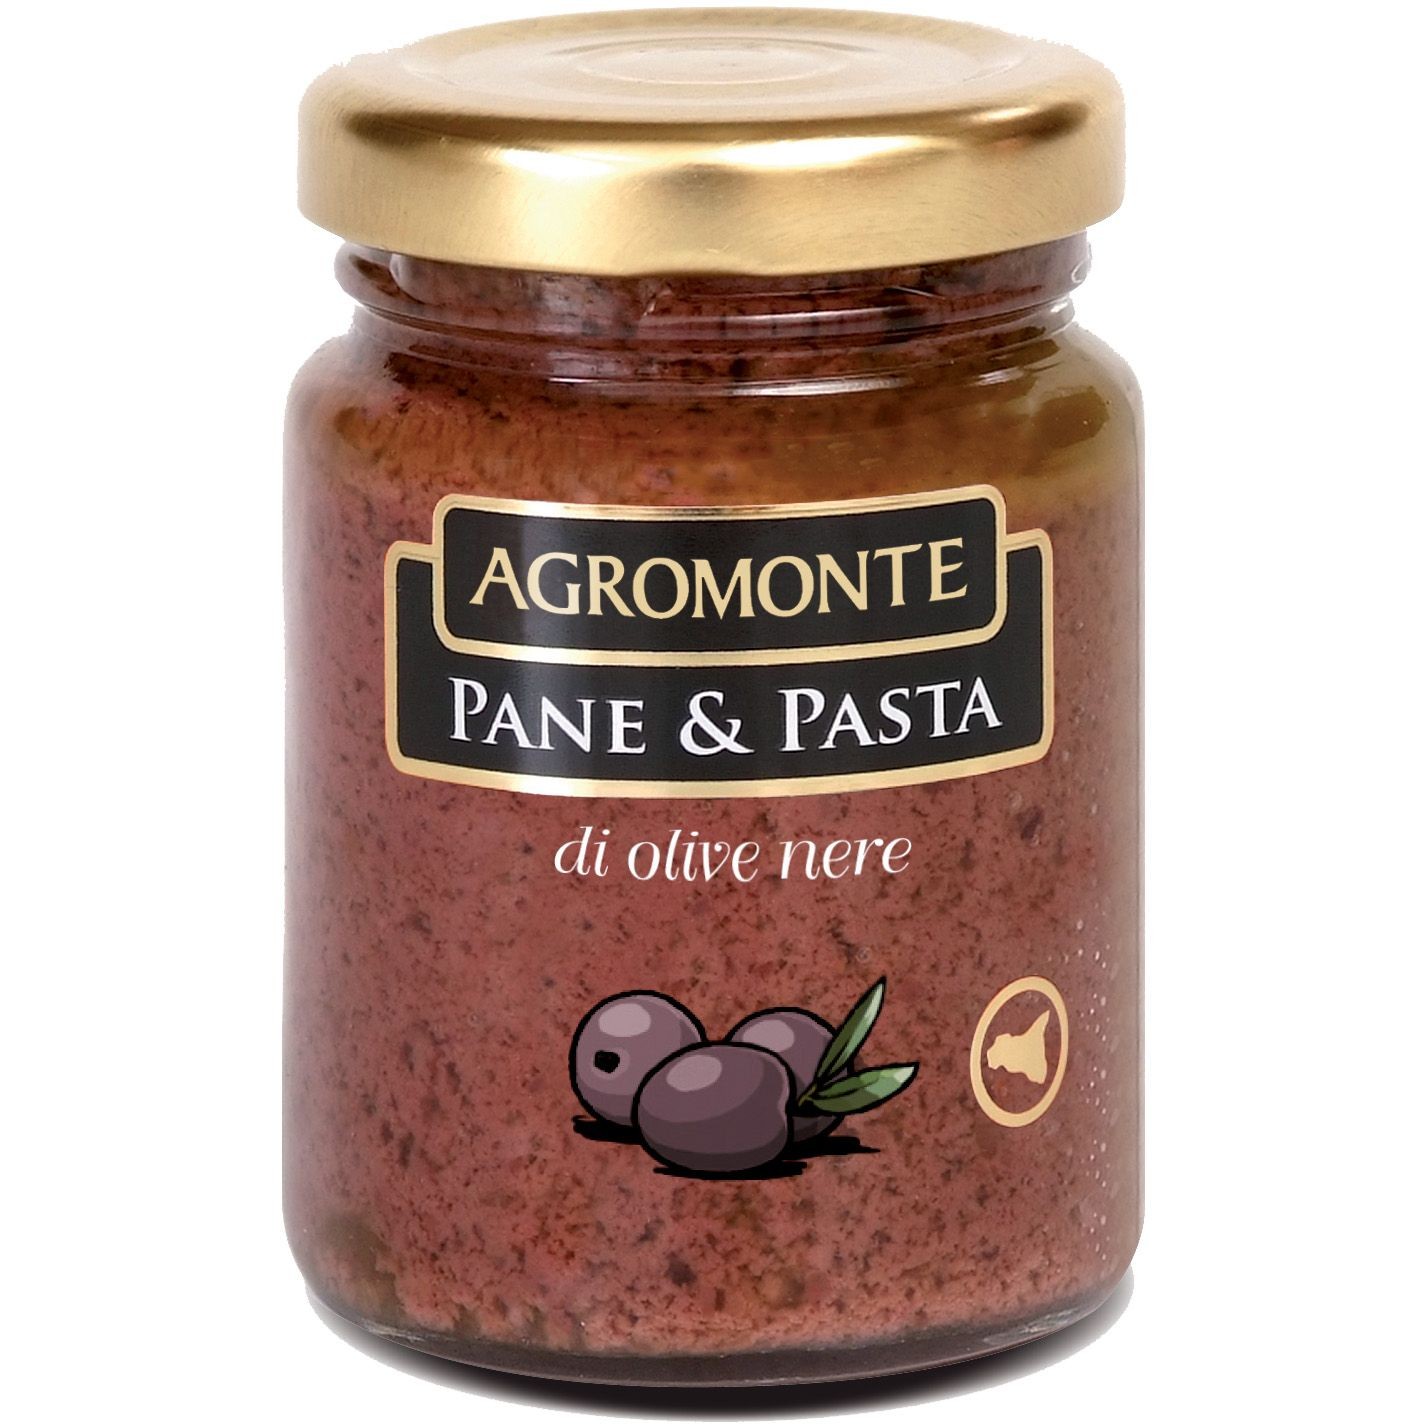 Agromonte Pane E Pasta - Crema din Masline Negre Simpla 200g